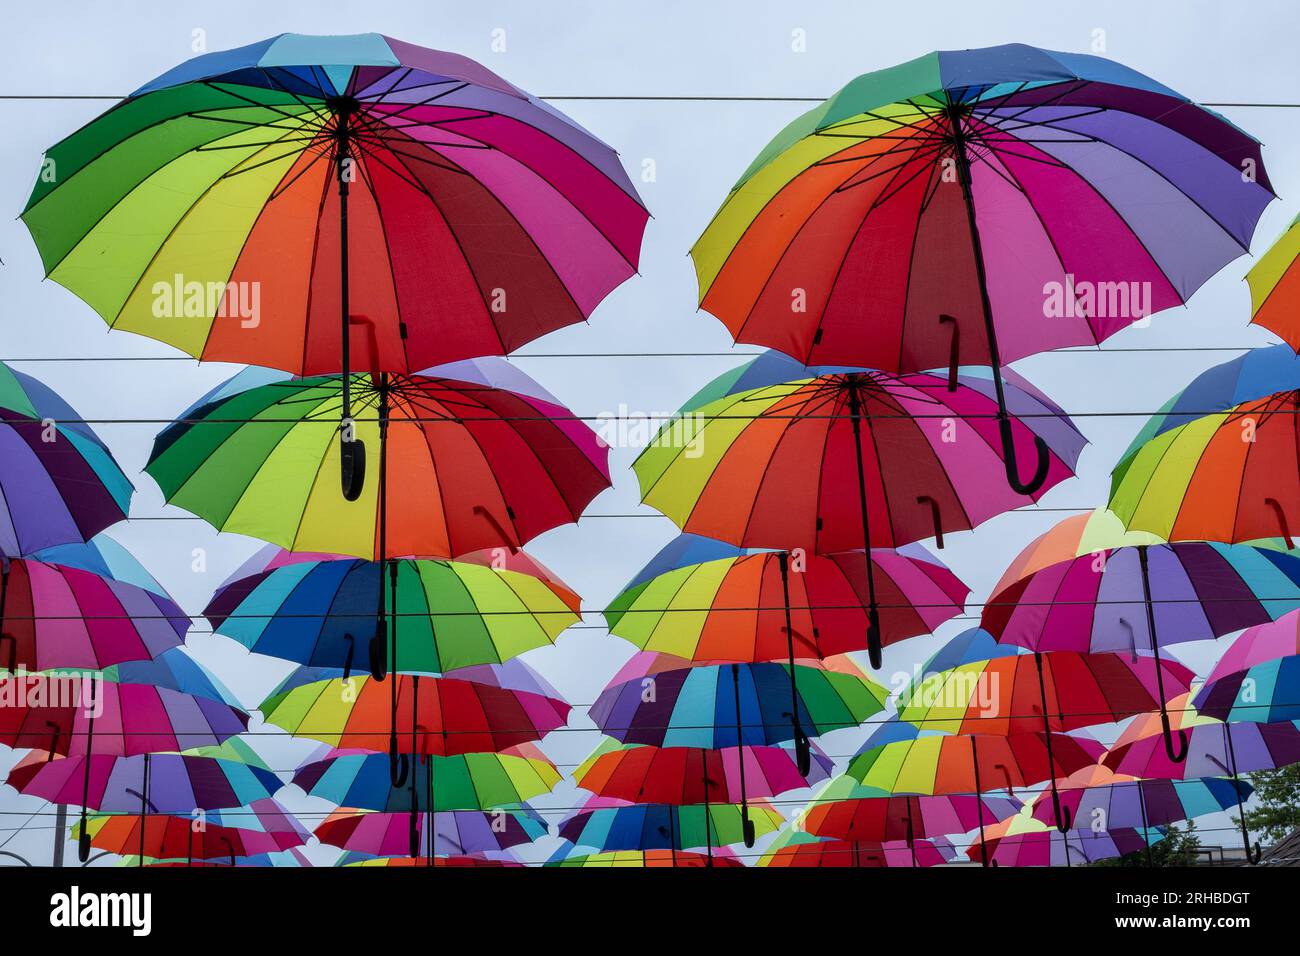 Viele regenbogenfarbene Regenschirme am Himmel Stockfoto